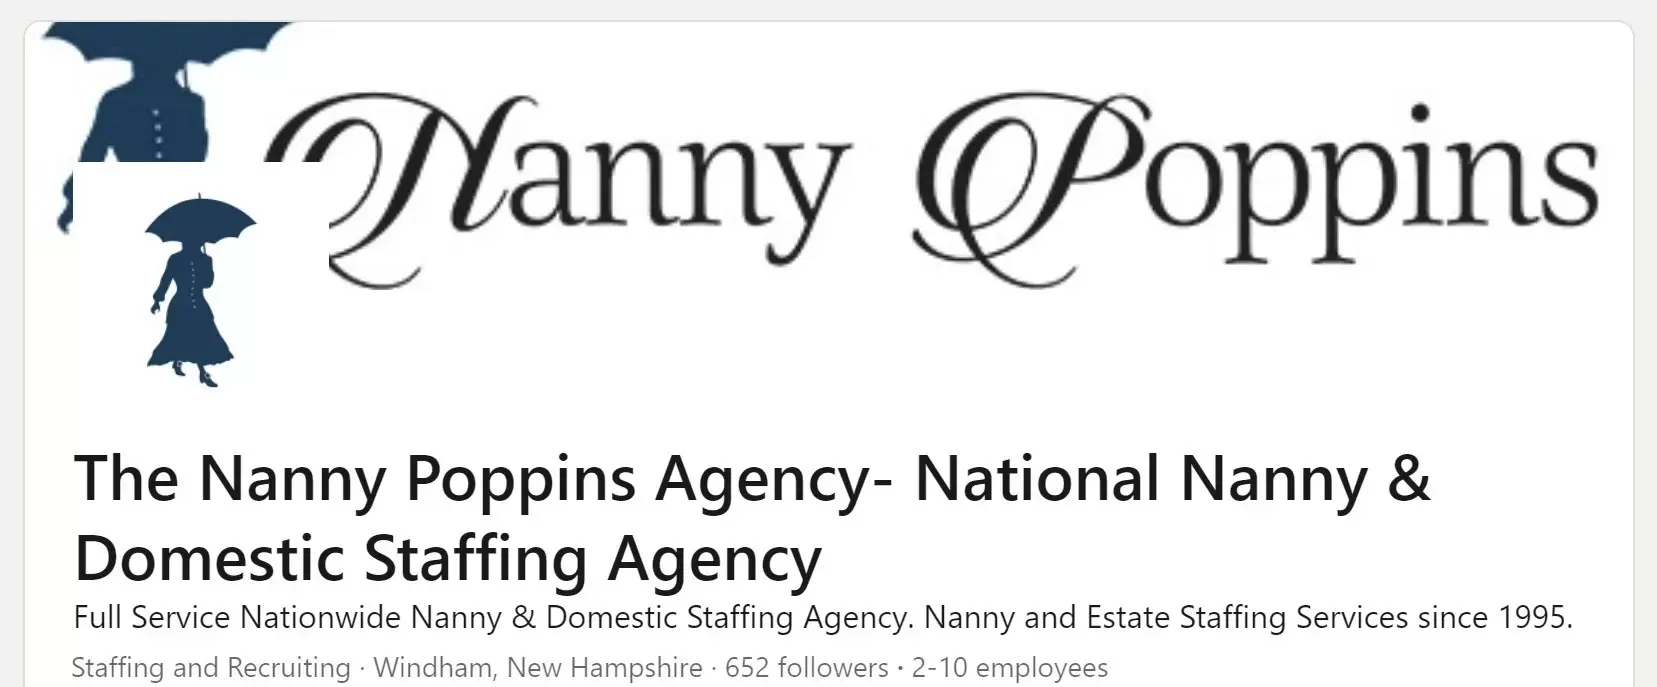 The Nanny Poppins Agency on LinkedIn